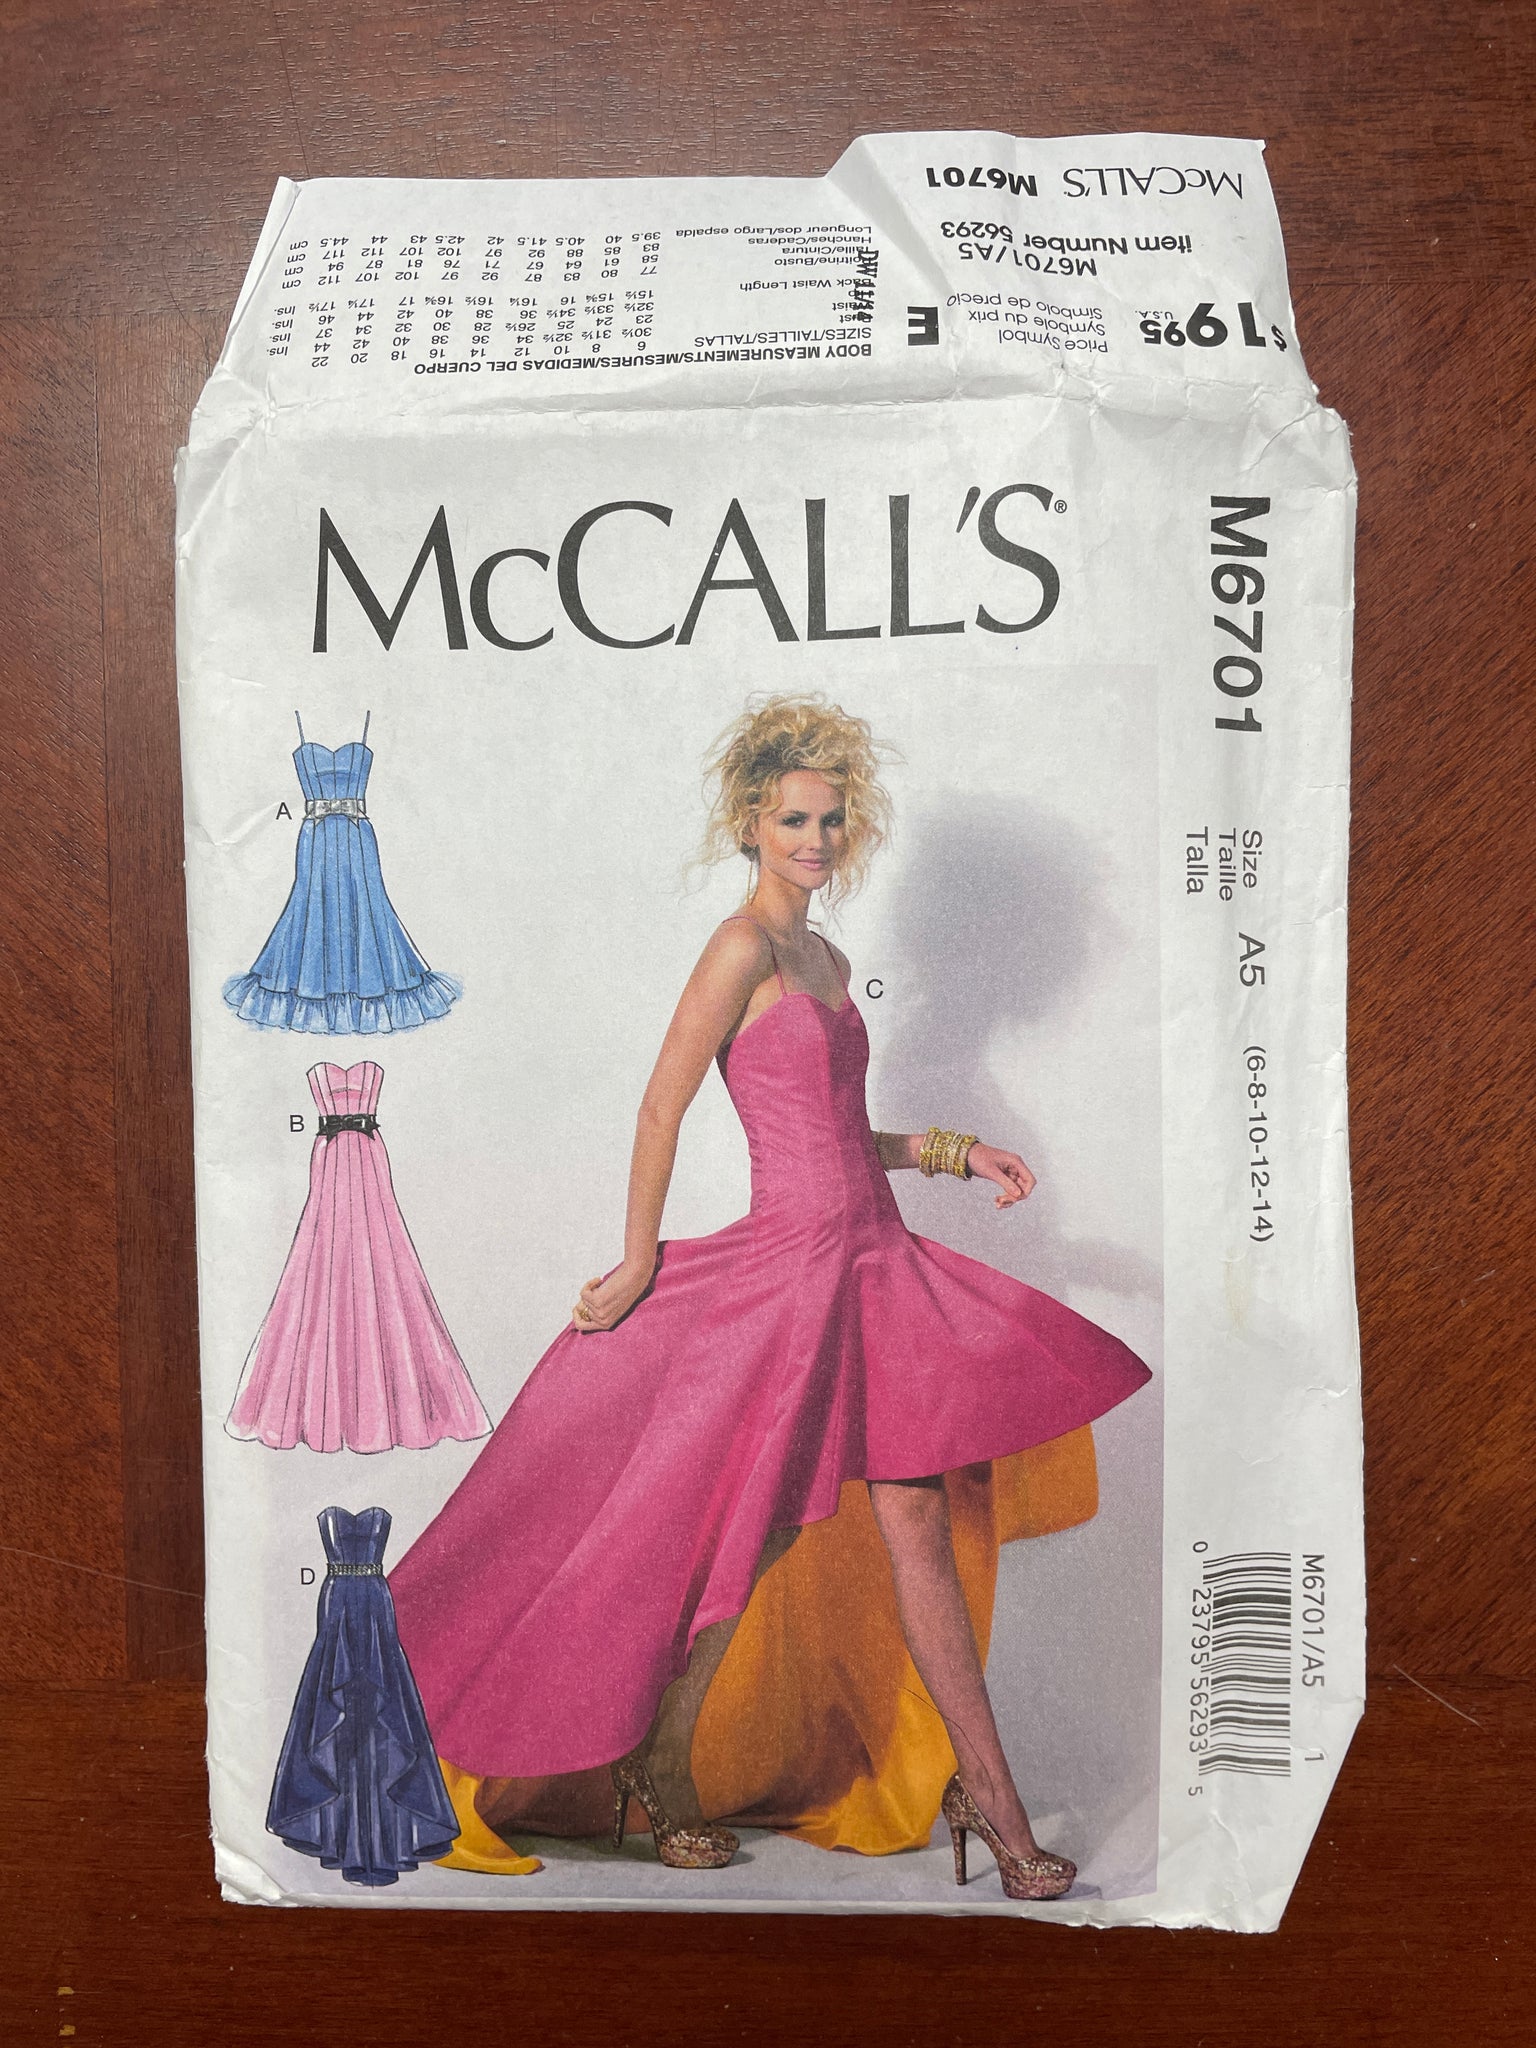 2013 McCall's 6701 Pattern - Dress FACTORY FOLDED